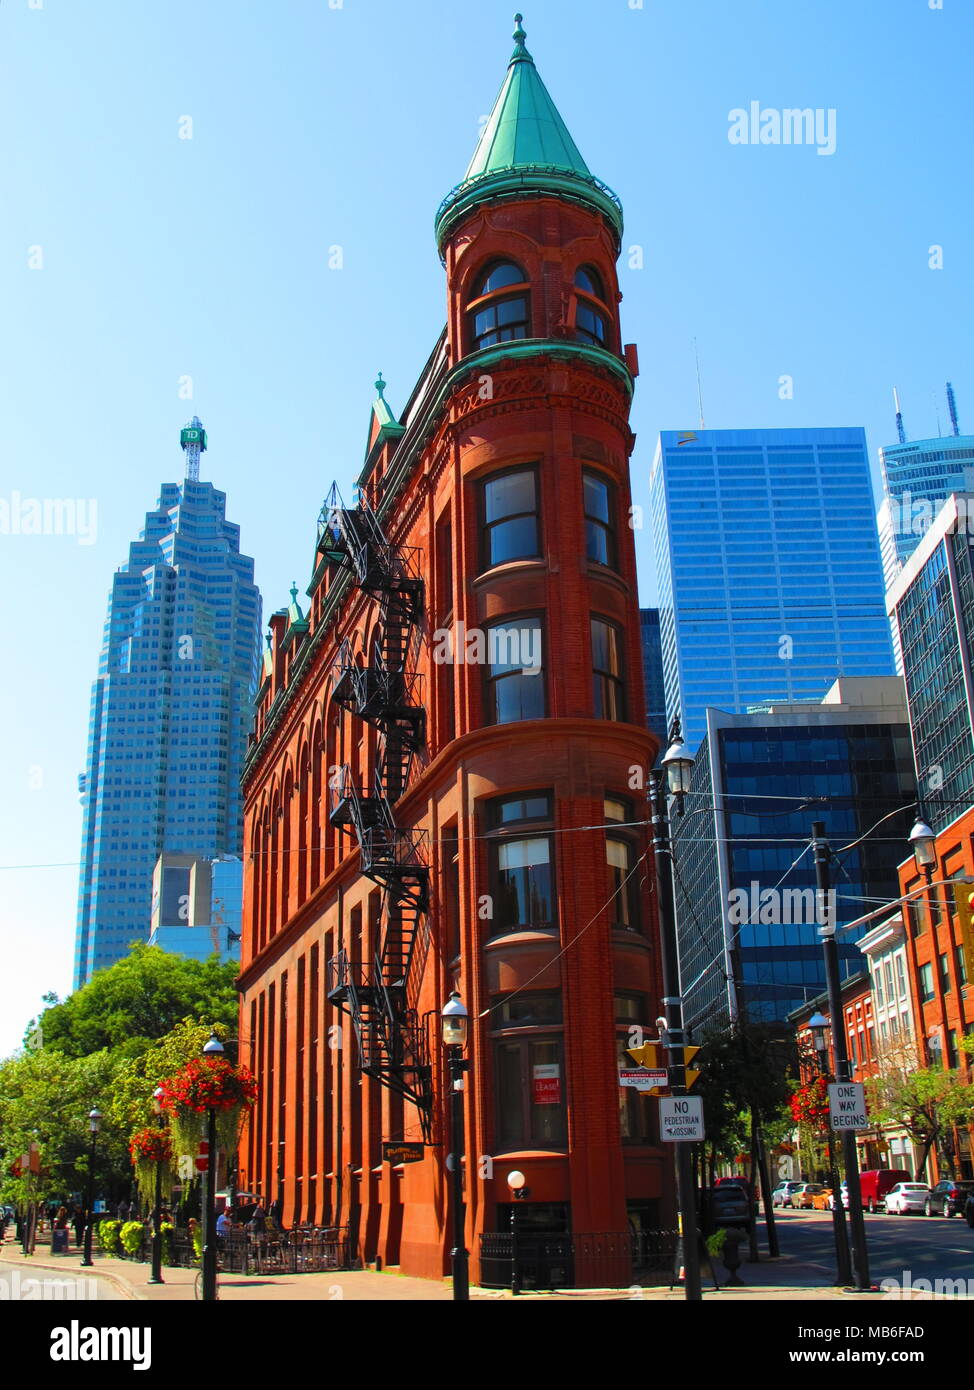 the Gooderham building, one famous landmark of Toronto Stock Photo